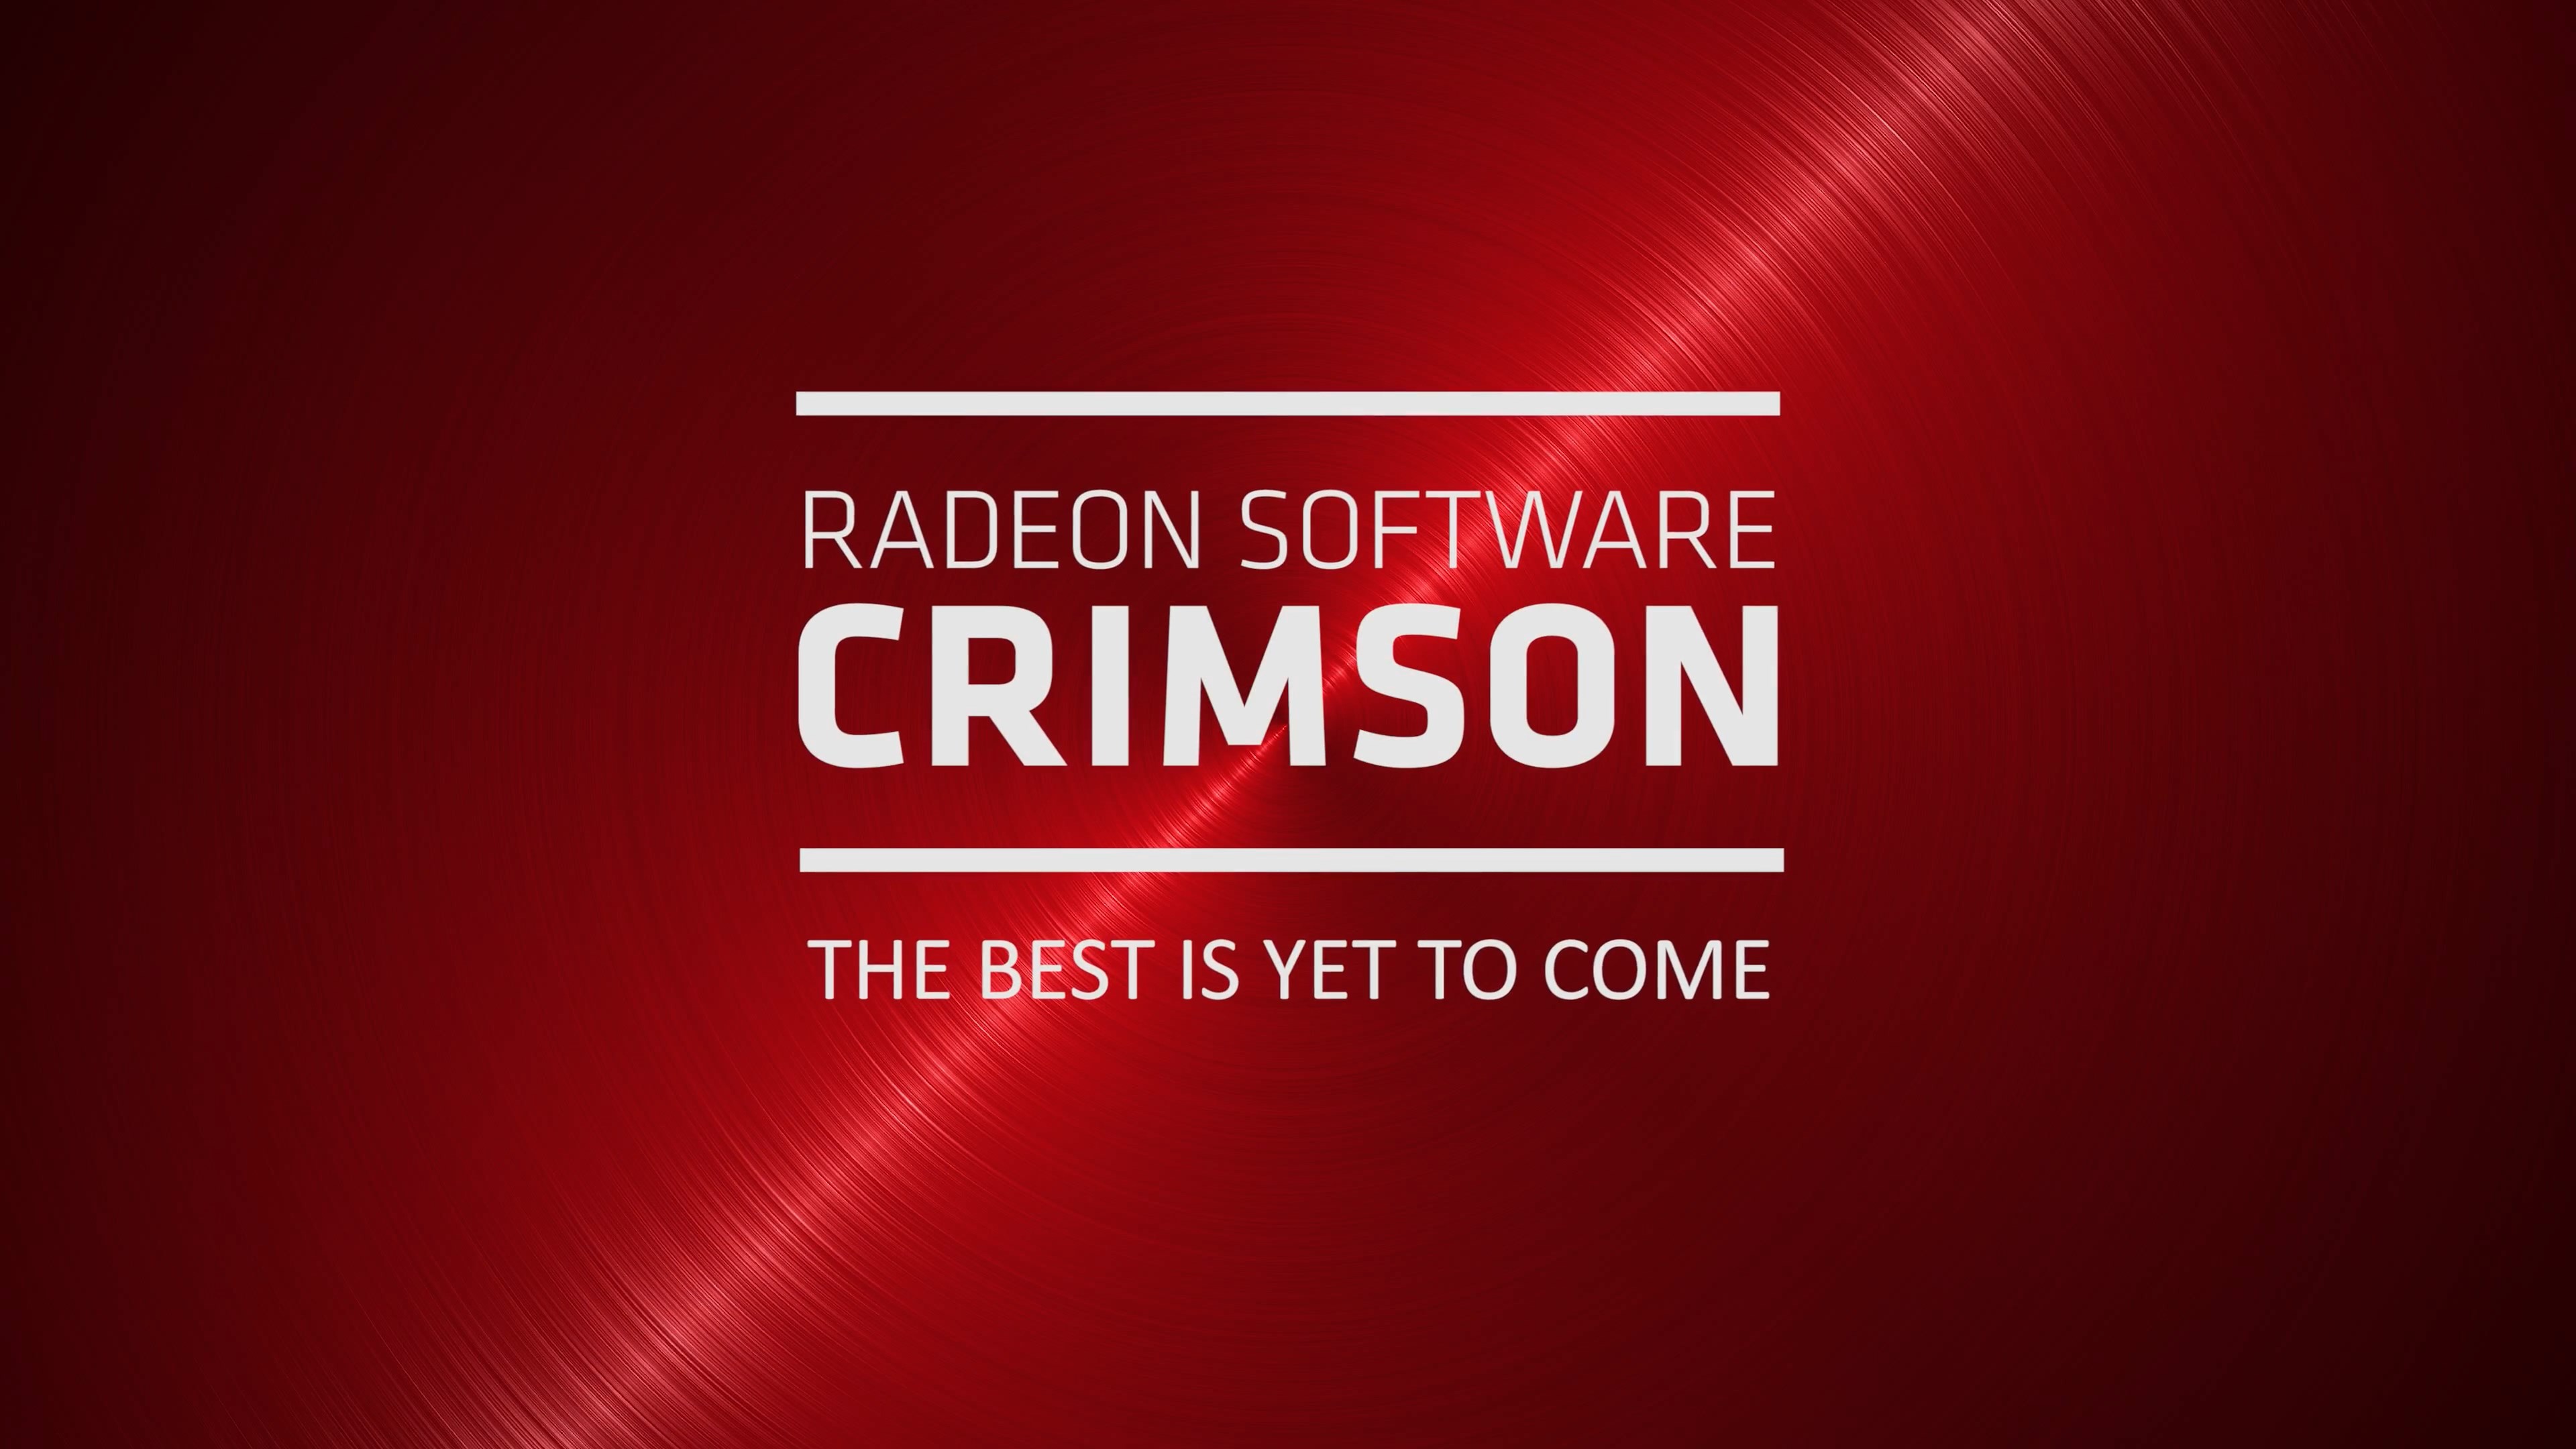 RIP AMD Catalyst, welcome Radeon Software : Crimson Edition 34